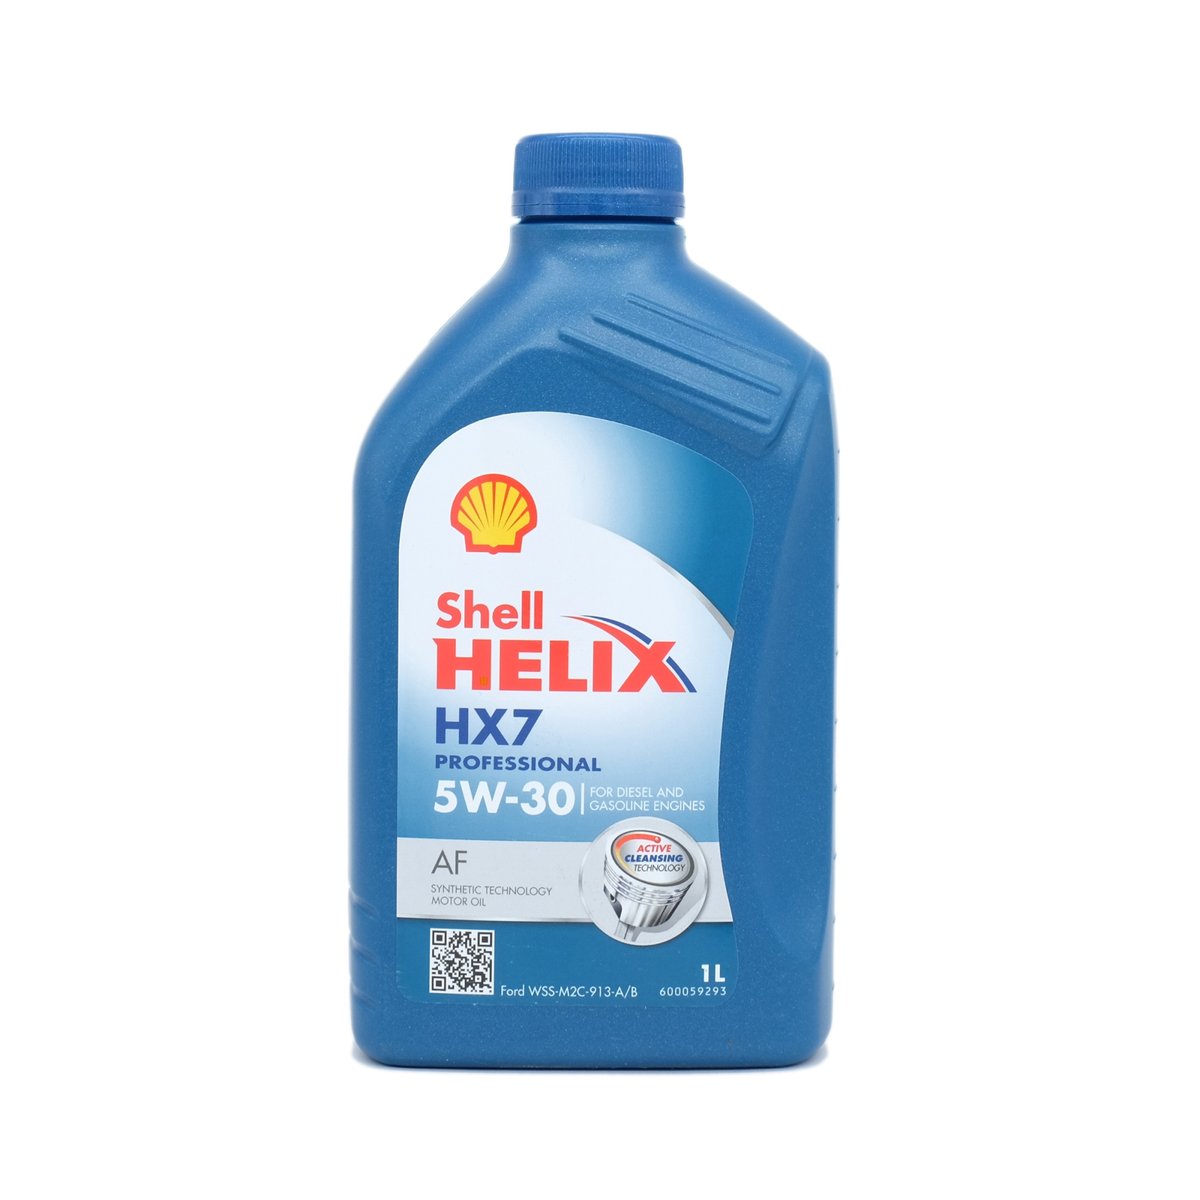 Shell Helix Hx7 Professional Af 5W-30 (1L)